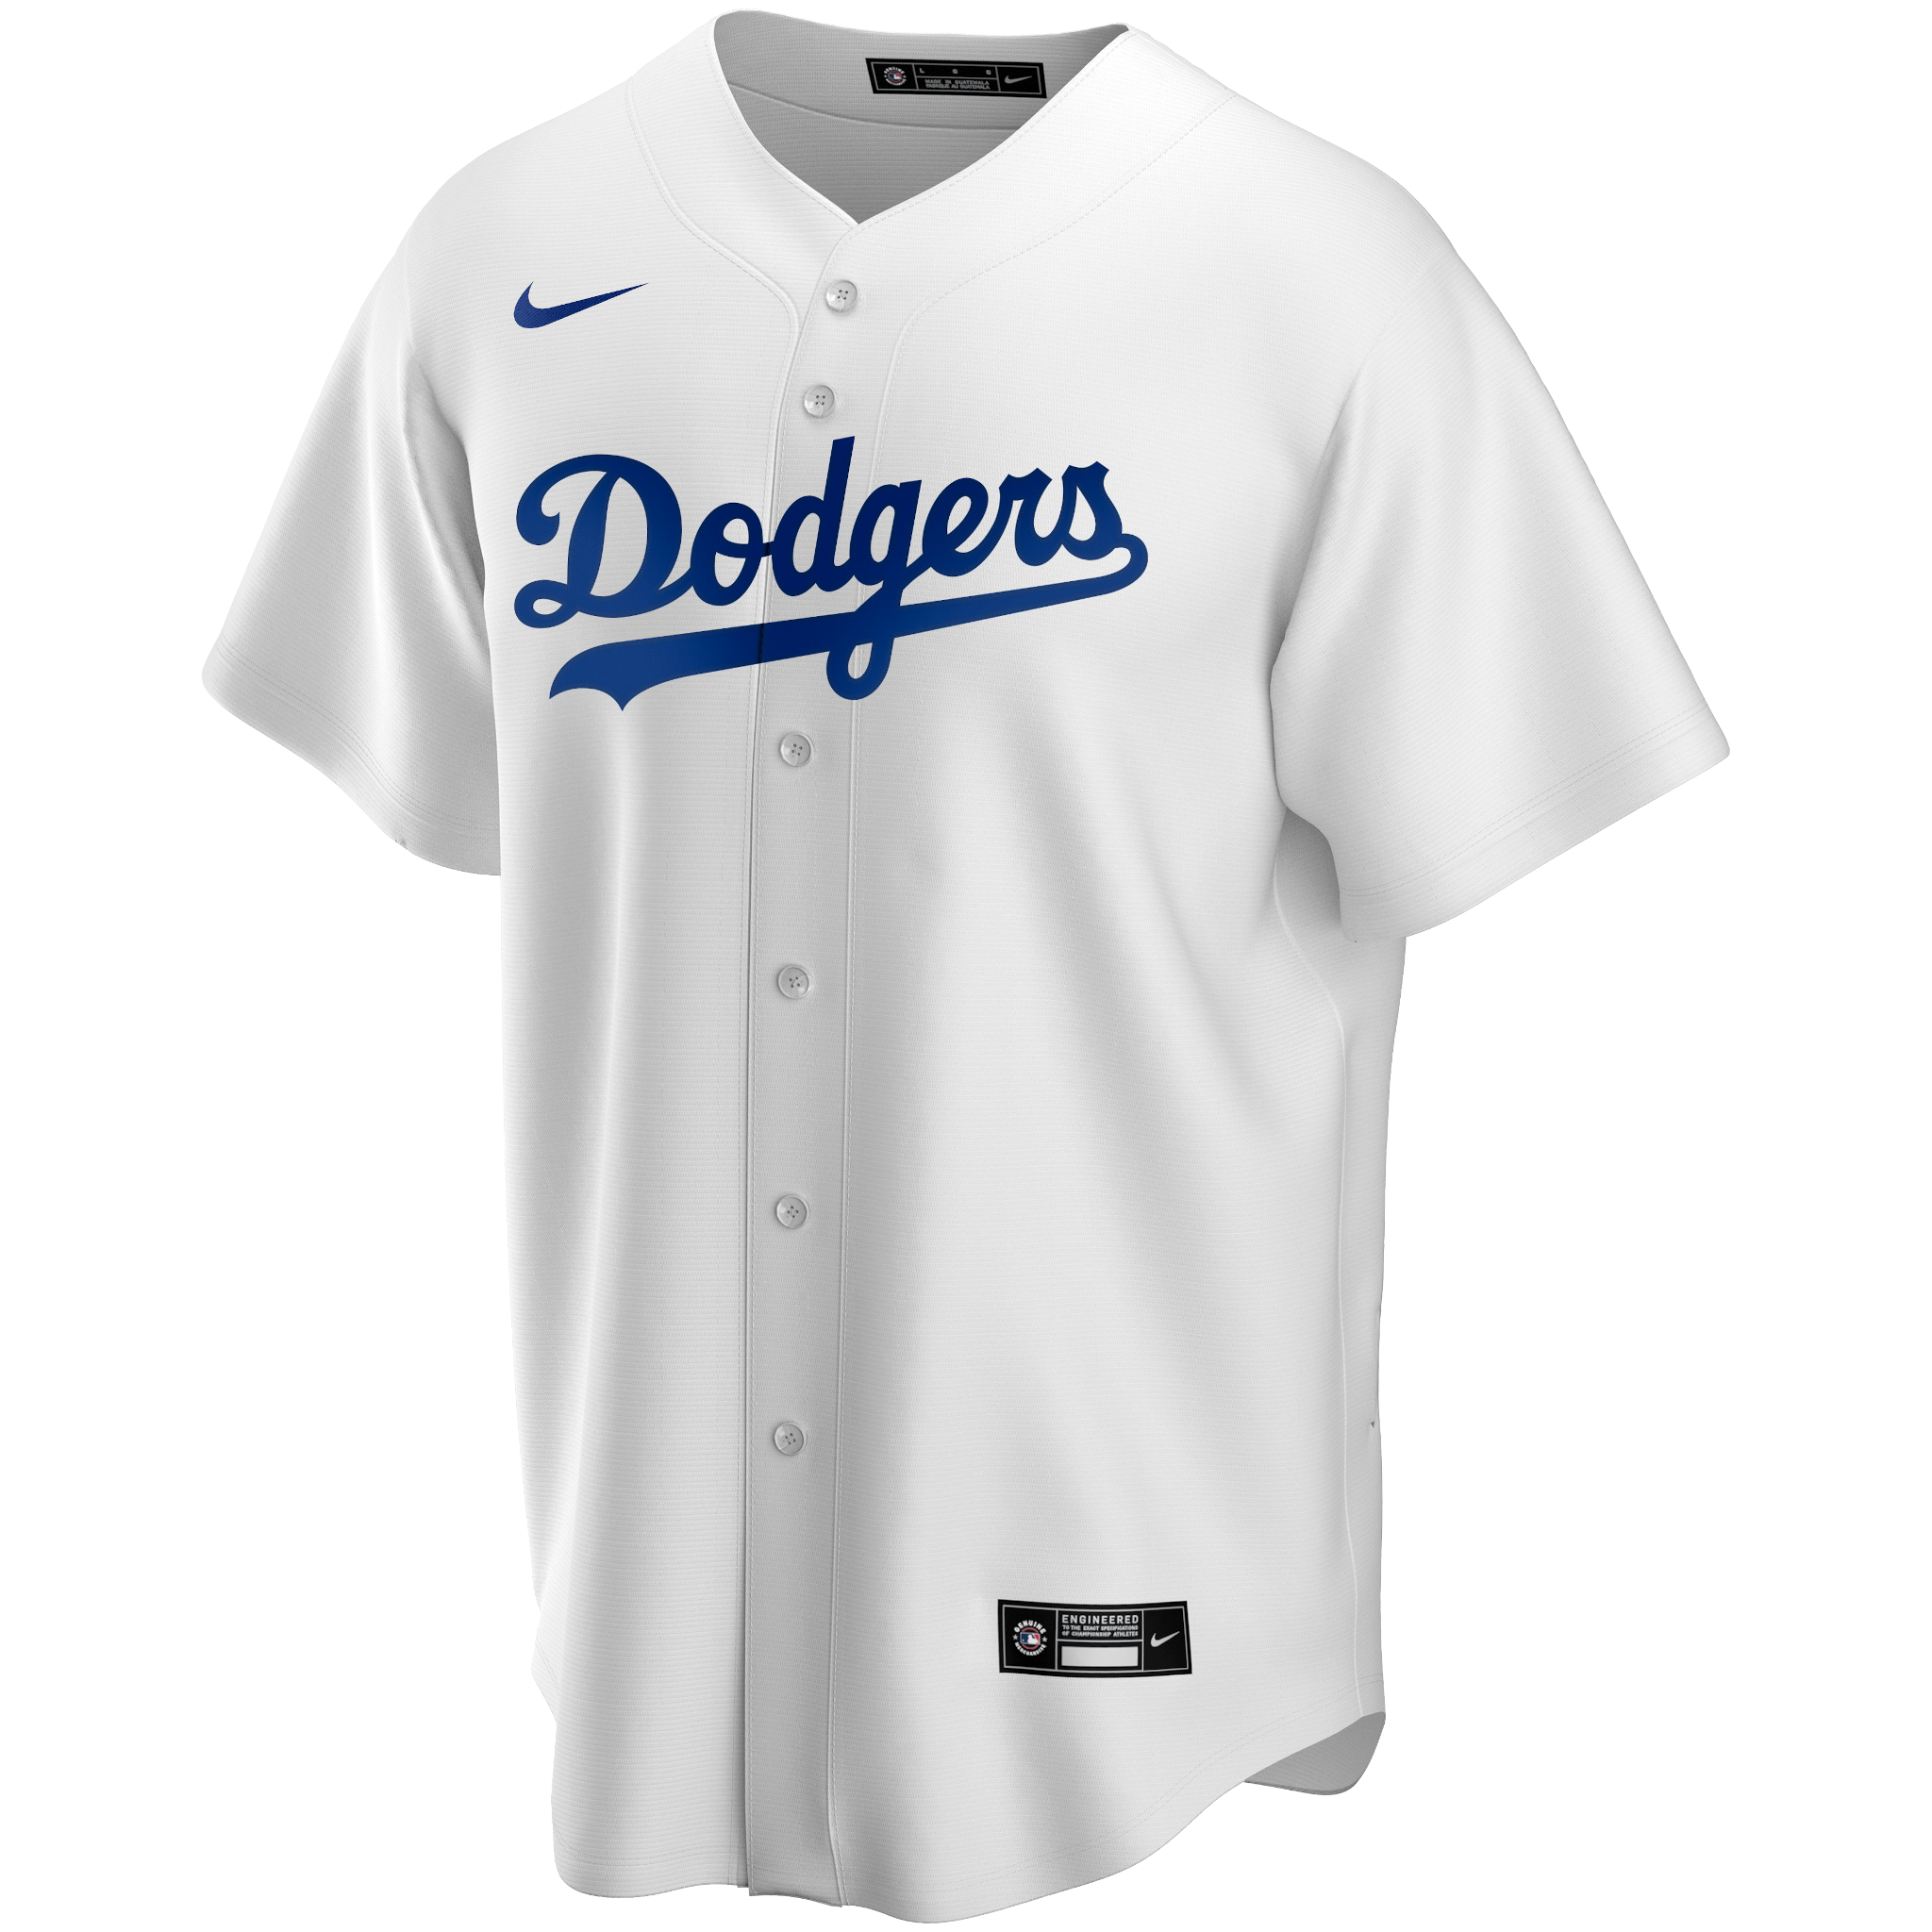 Dodgers Jackie Robinson Replica Jersey 04/15/2022 SGA Adult Medium Giveaway  NEW